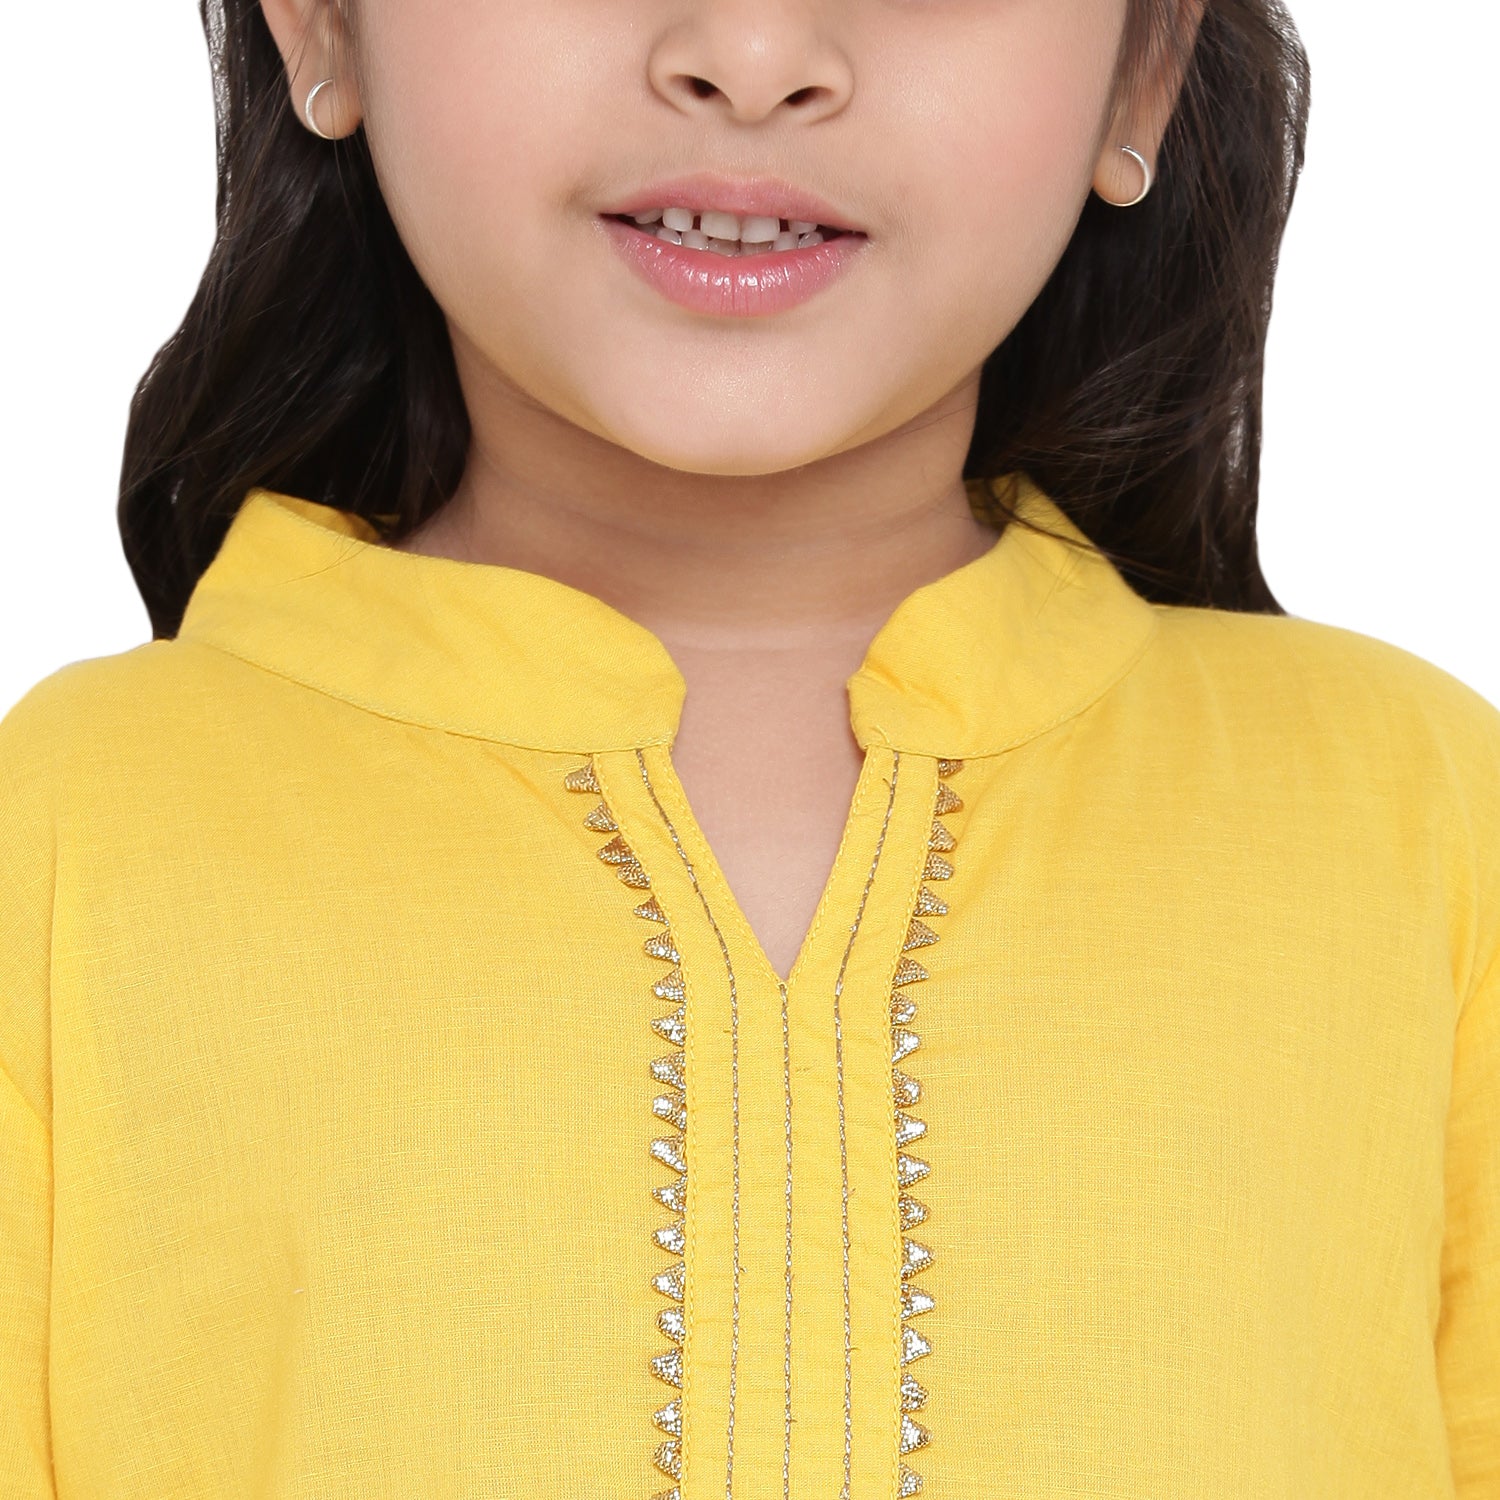 Girl's Yellow Solid Kurta With Sharara & Pink Dupatta - Bitiya By Bhama